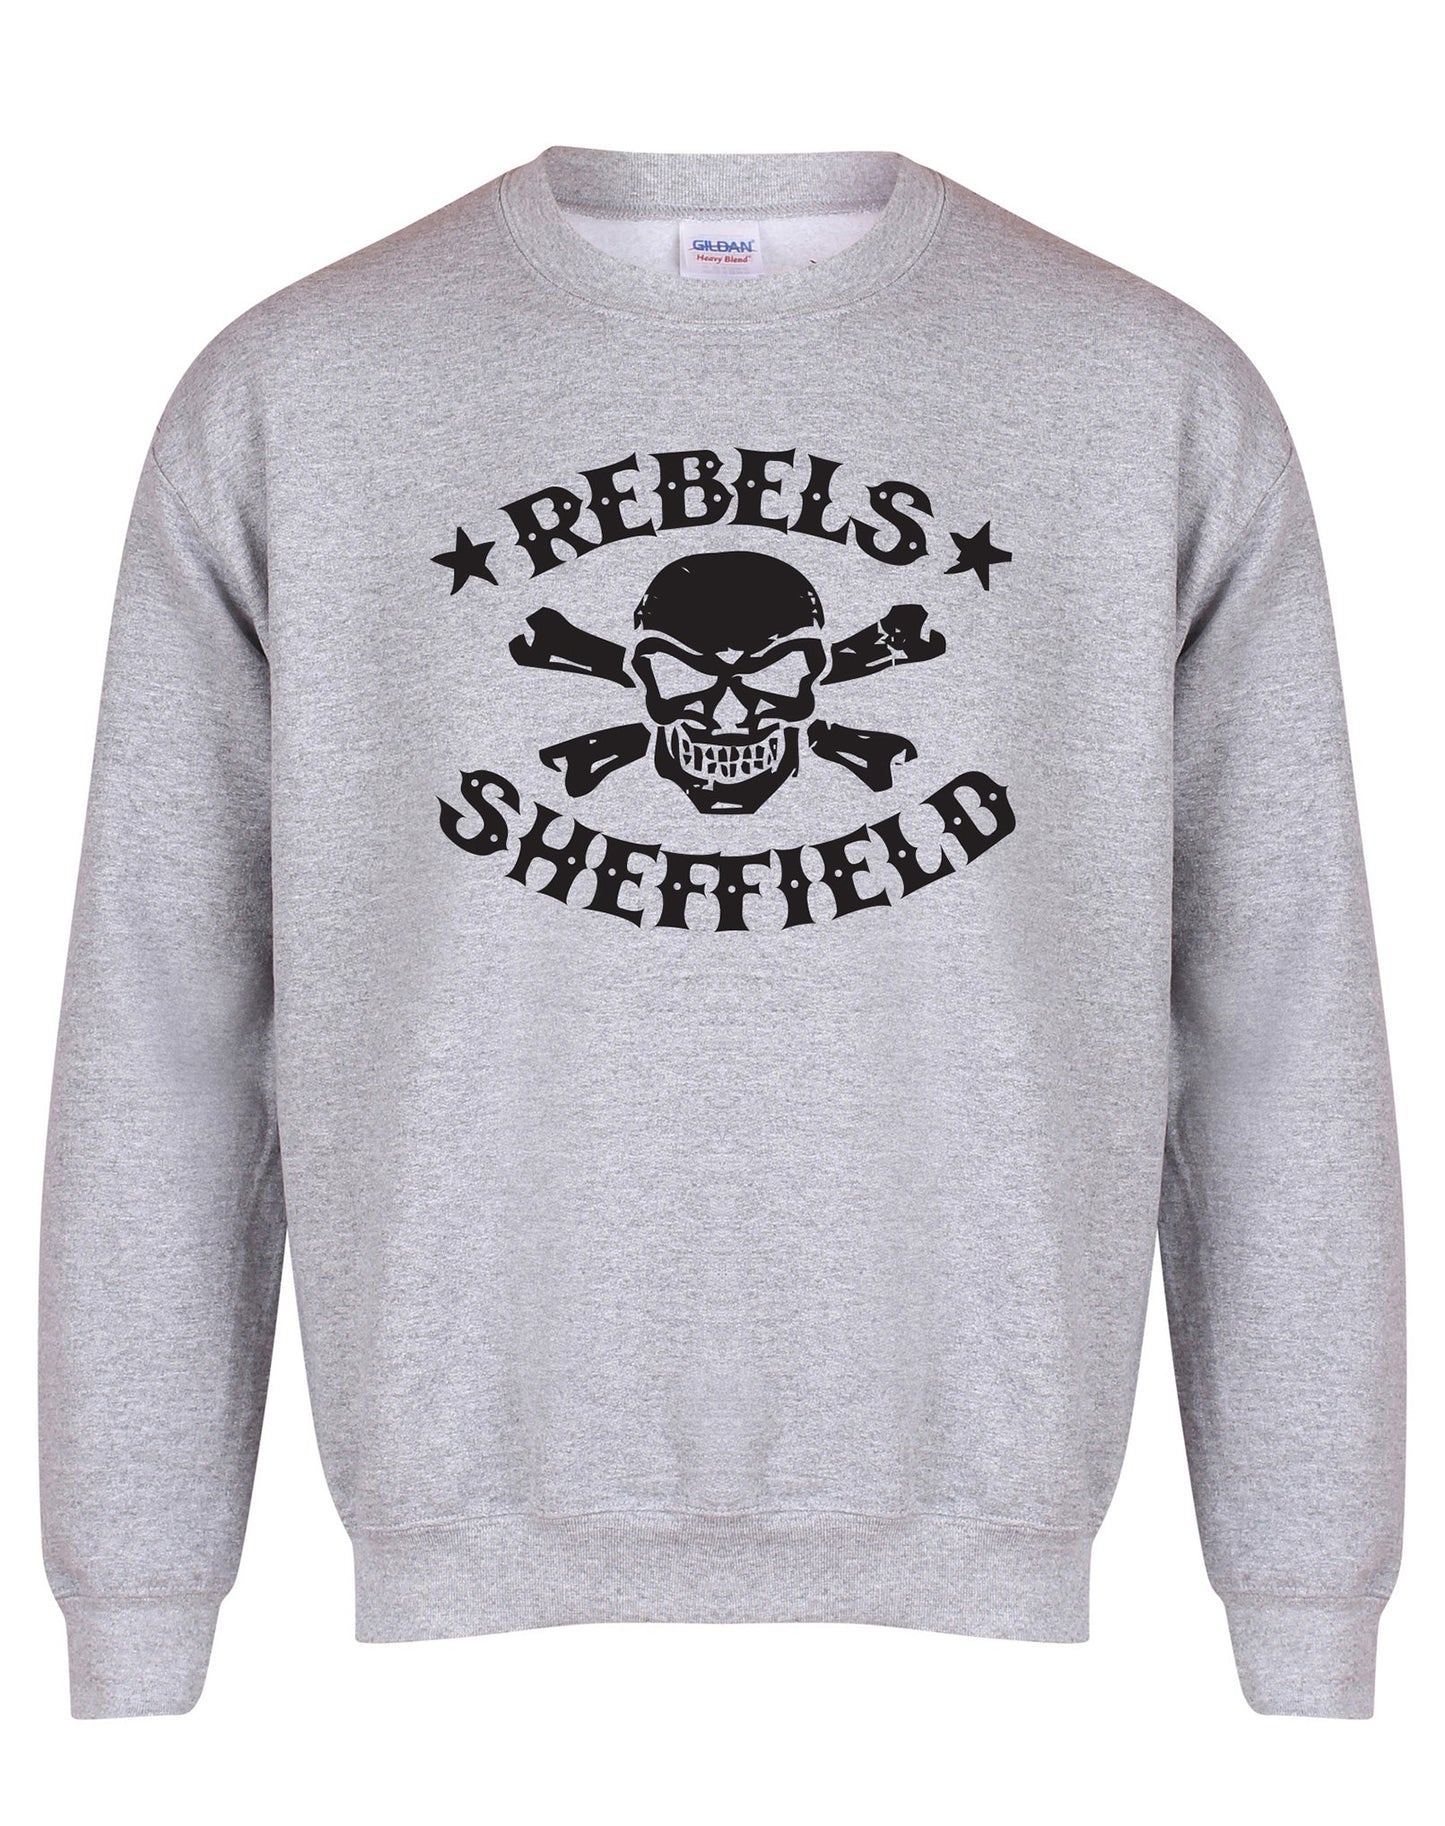 Rebels skull/crossbones unisex fit sweatshirt - various colours - Dirty Stop Outs